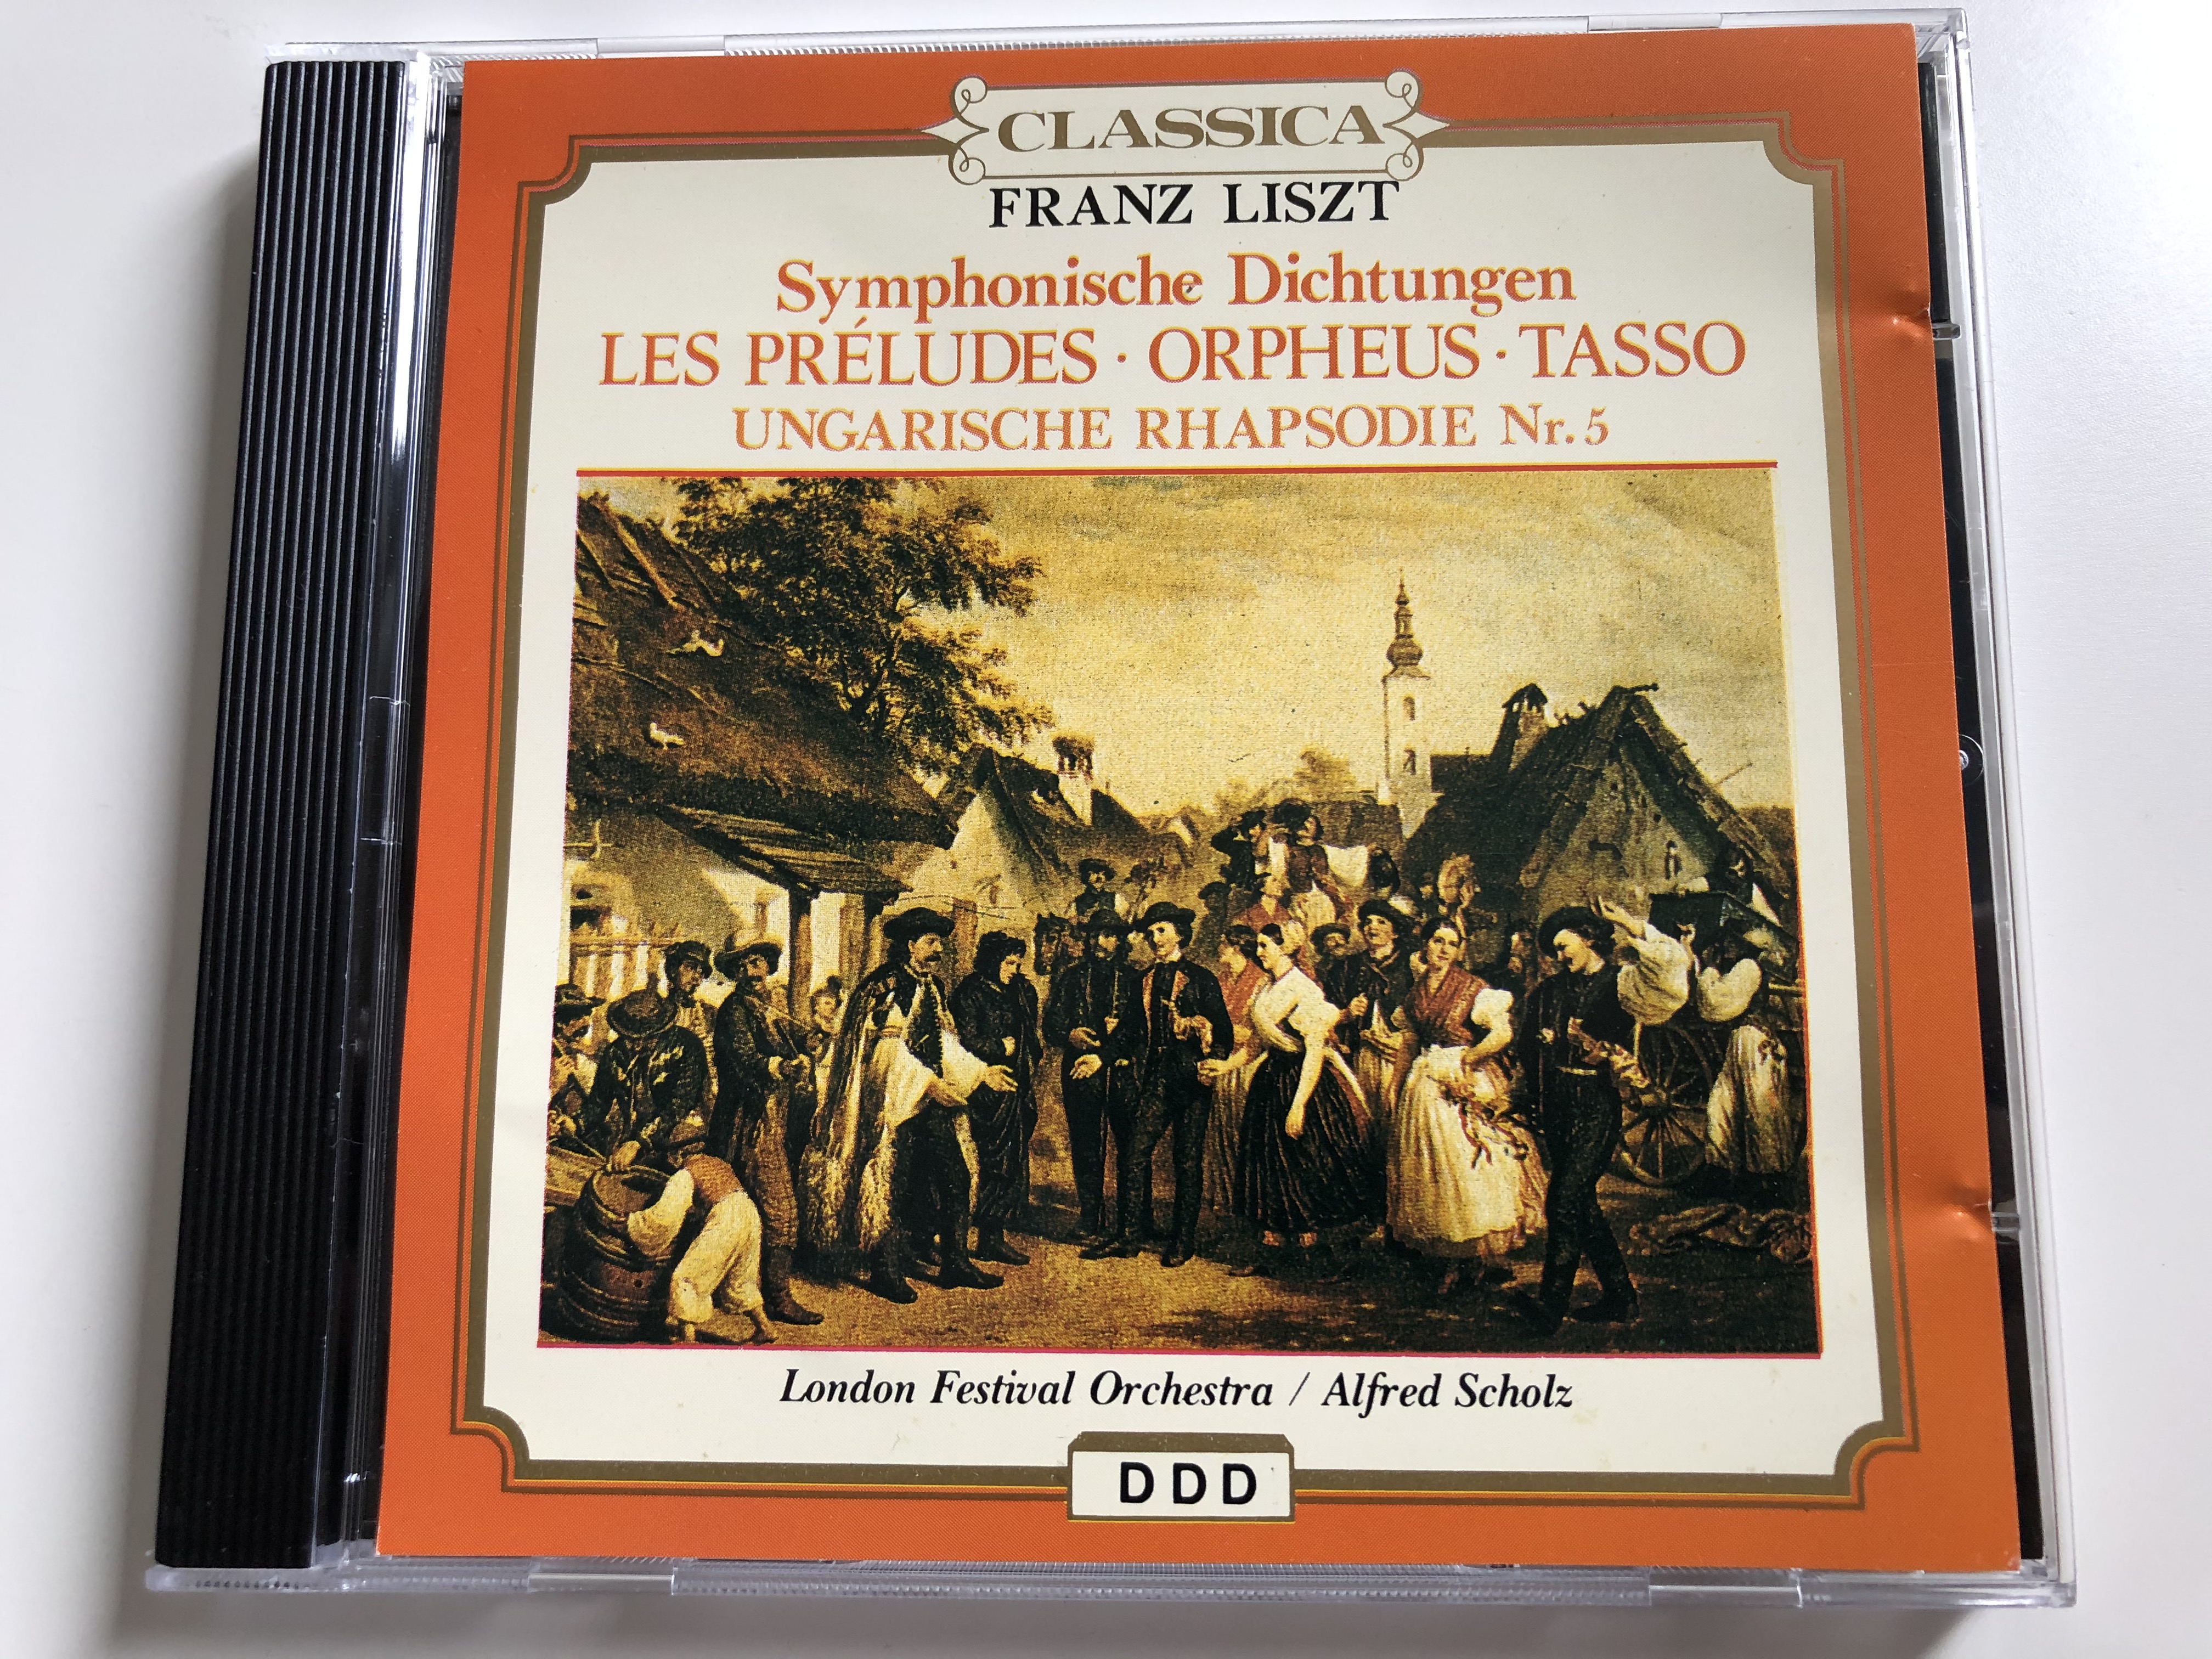 franz-liszt-symphonische-dichtungen-les-preludes-orpheus-tasso-ungarische-rhapsodie-nr.-5-london-festival-orchestra-alfred-scholz-eec-audio-cd-1990-stereo-cd-55041-1-.jpg